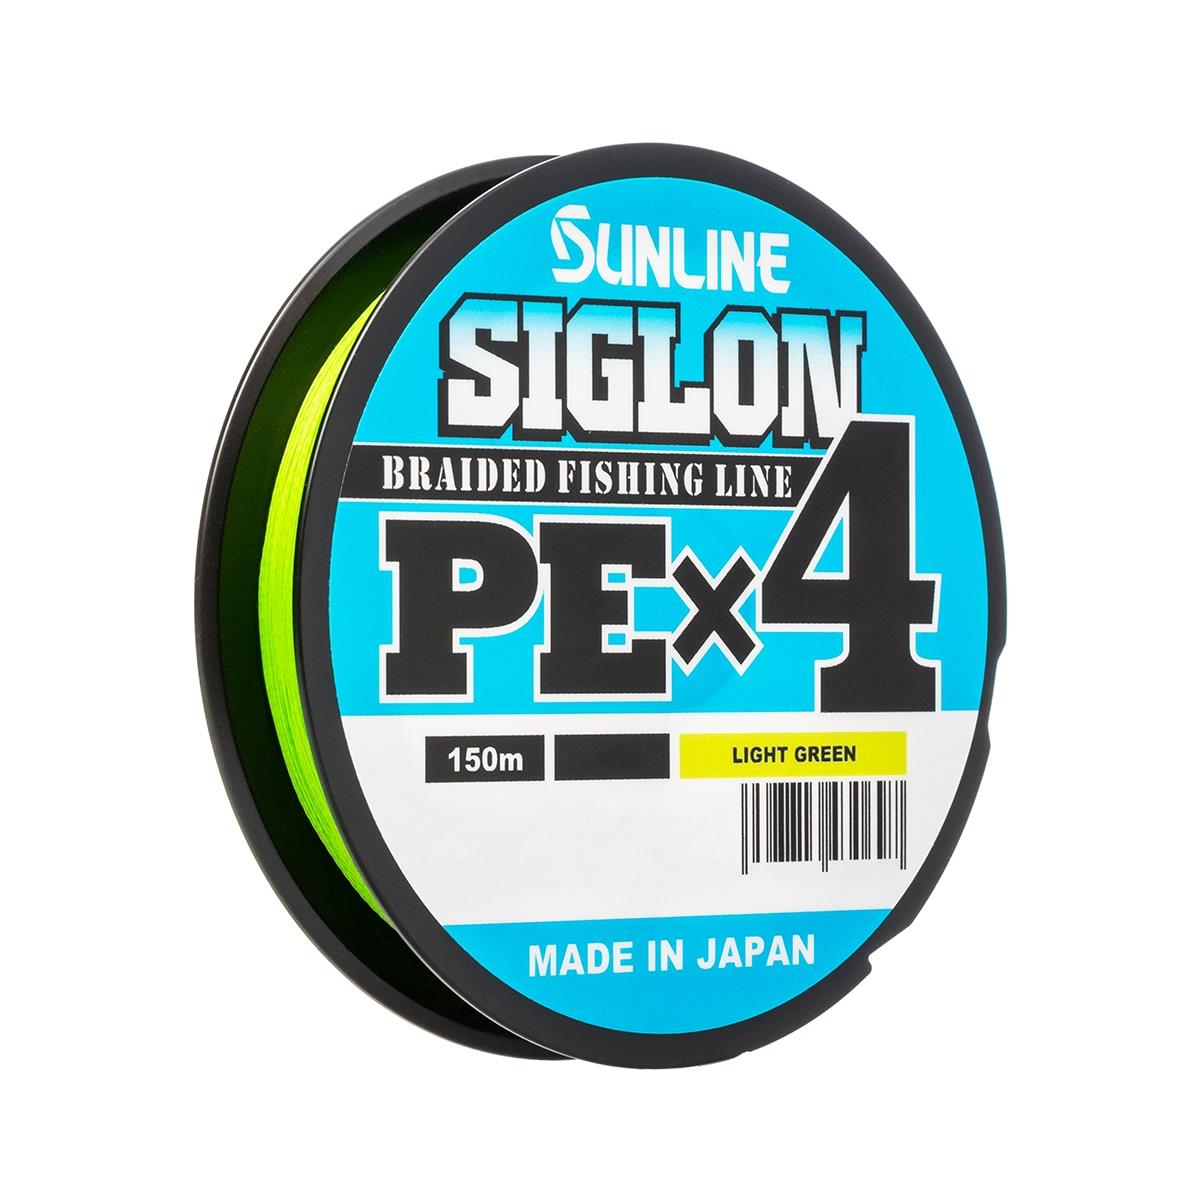 Шнур SIGLON PE×4 150 м (Light green) Sunline мультитестер green helper